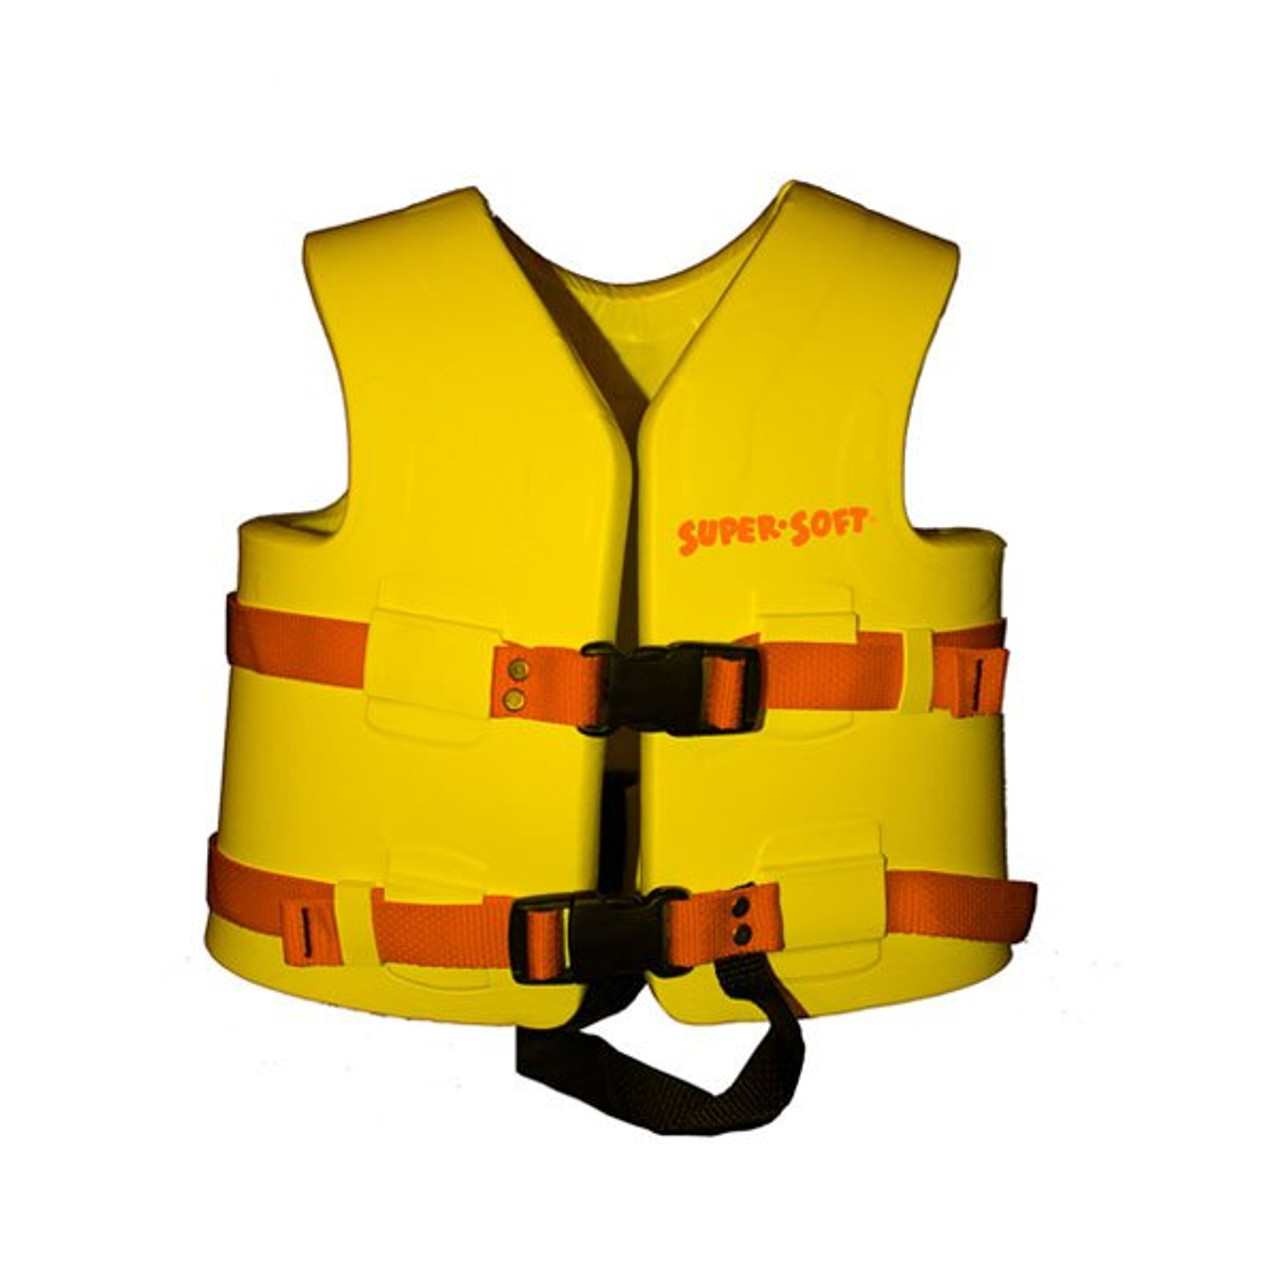 TRC Recreation Yellow Super Soft Child Vest - Extra Small